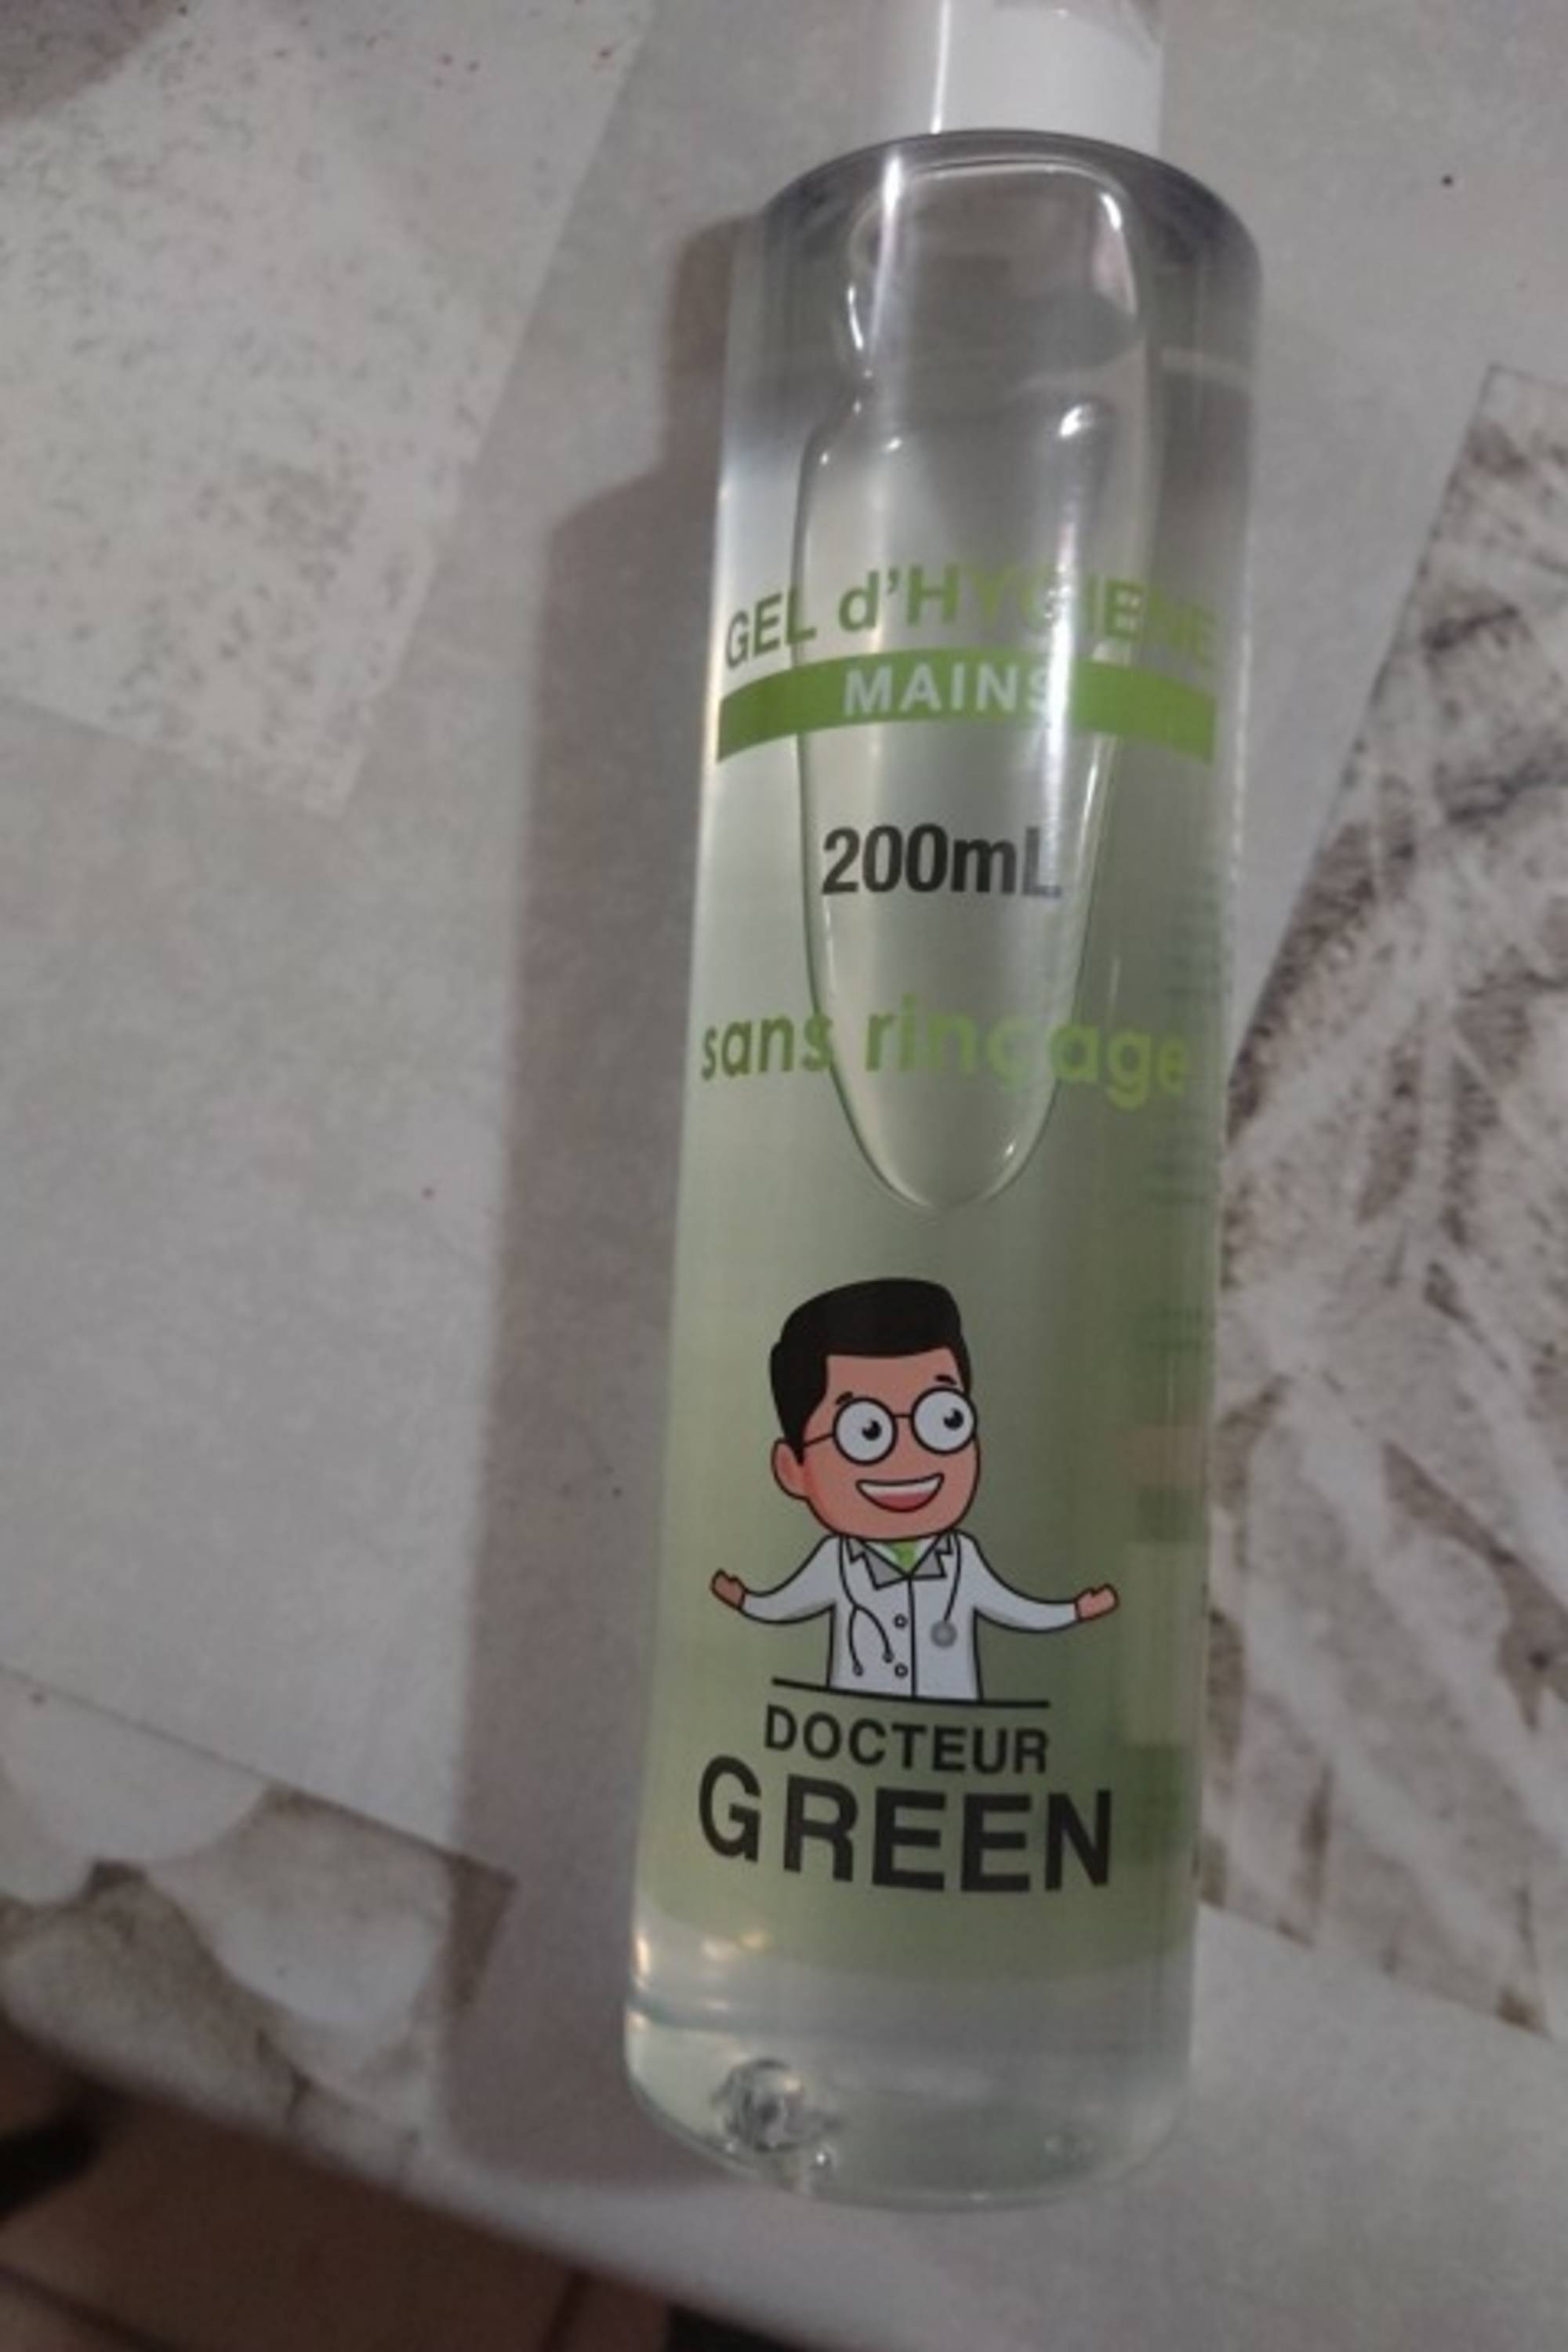 DOCTEUR GREEN - Gel d'hygiène mains